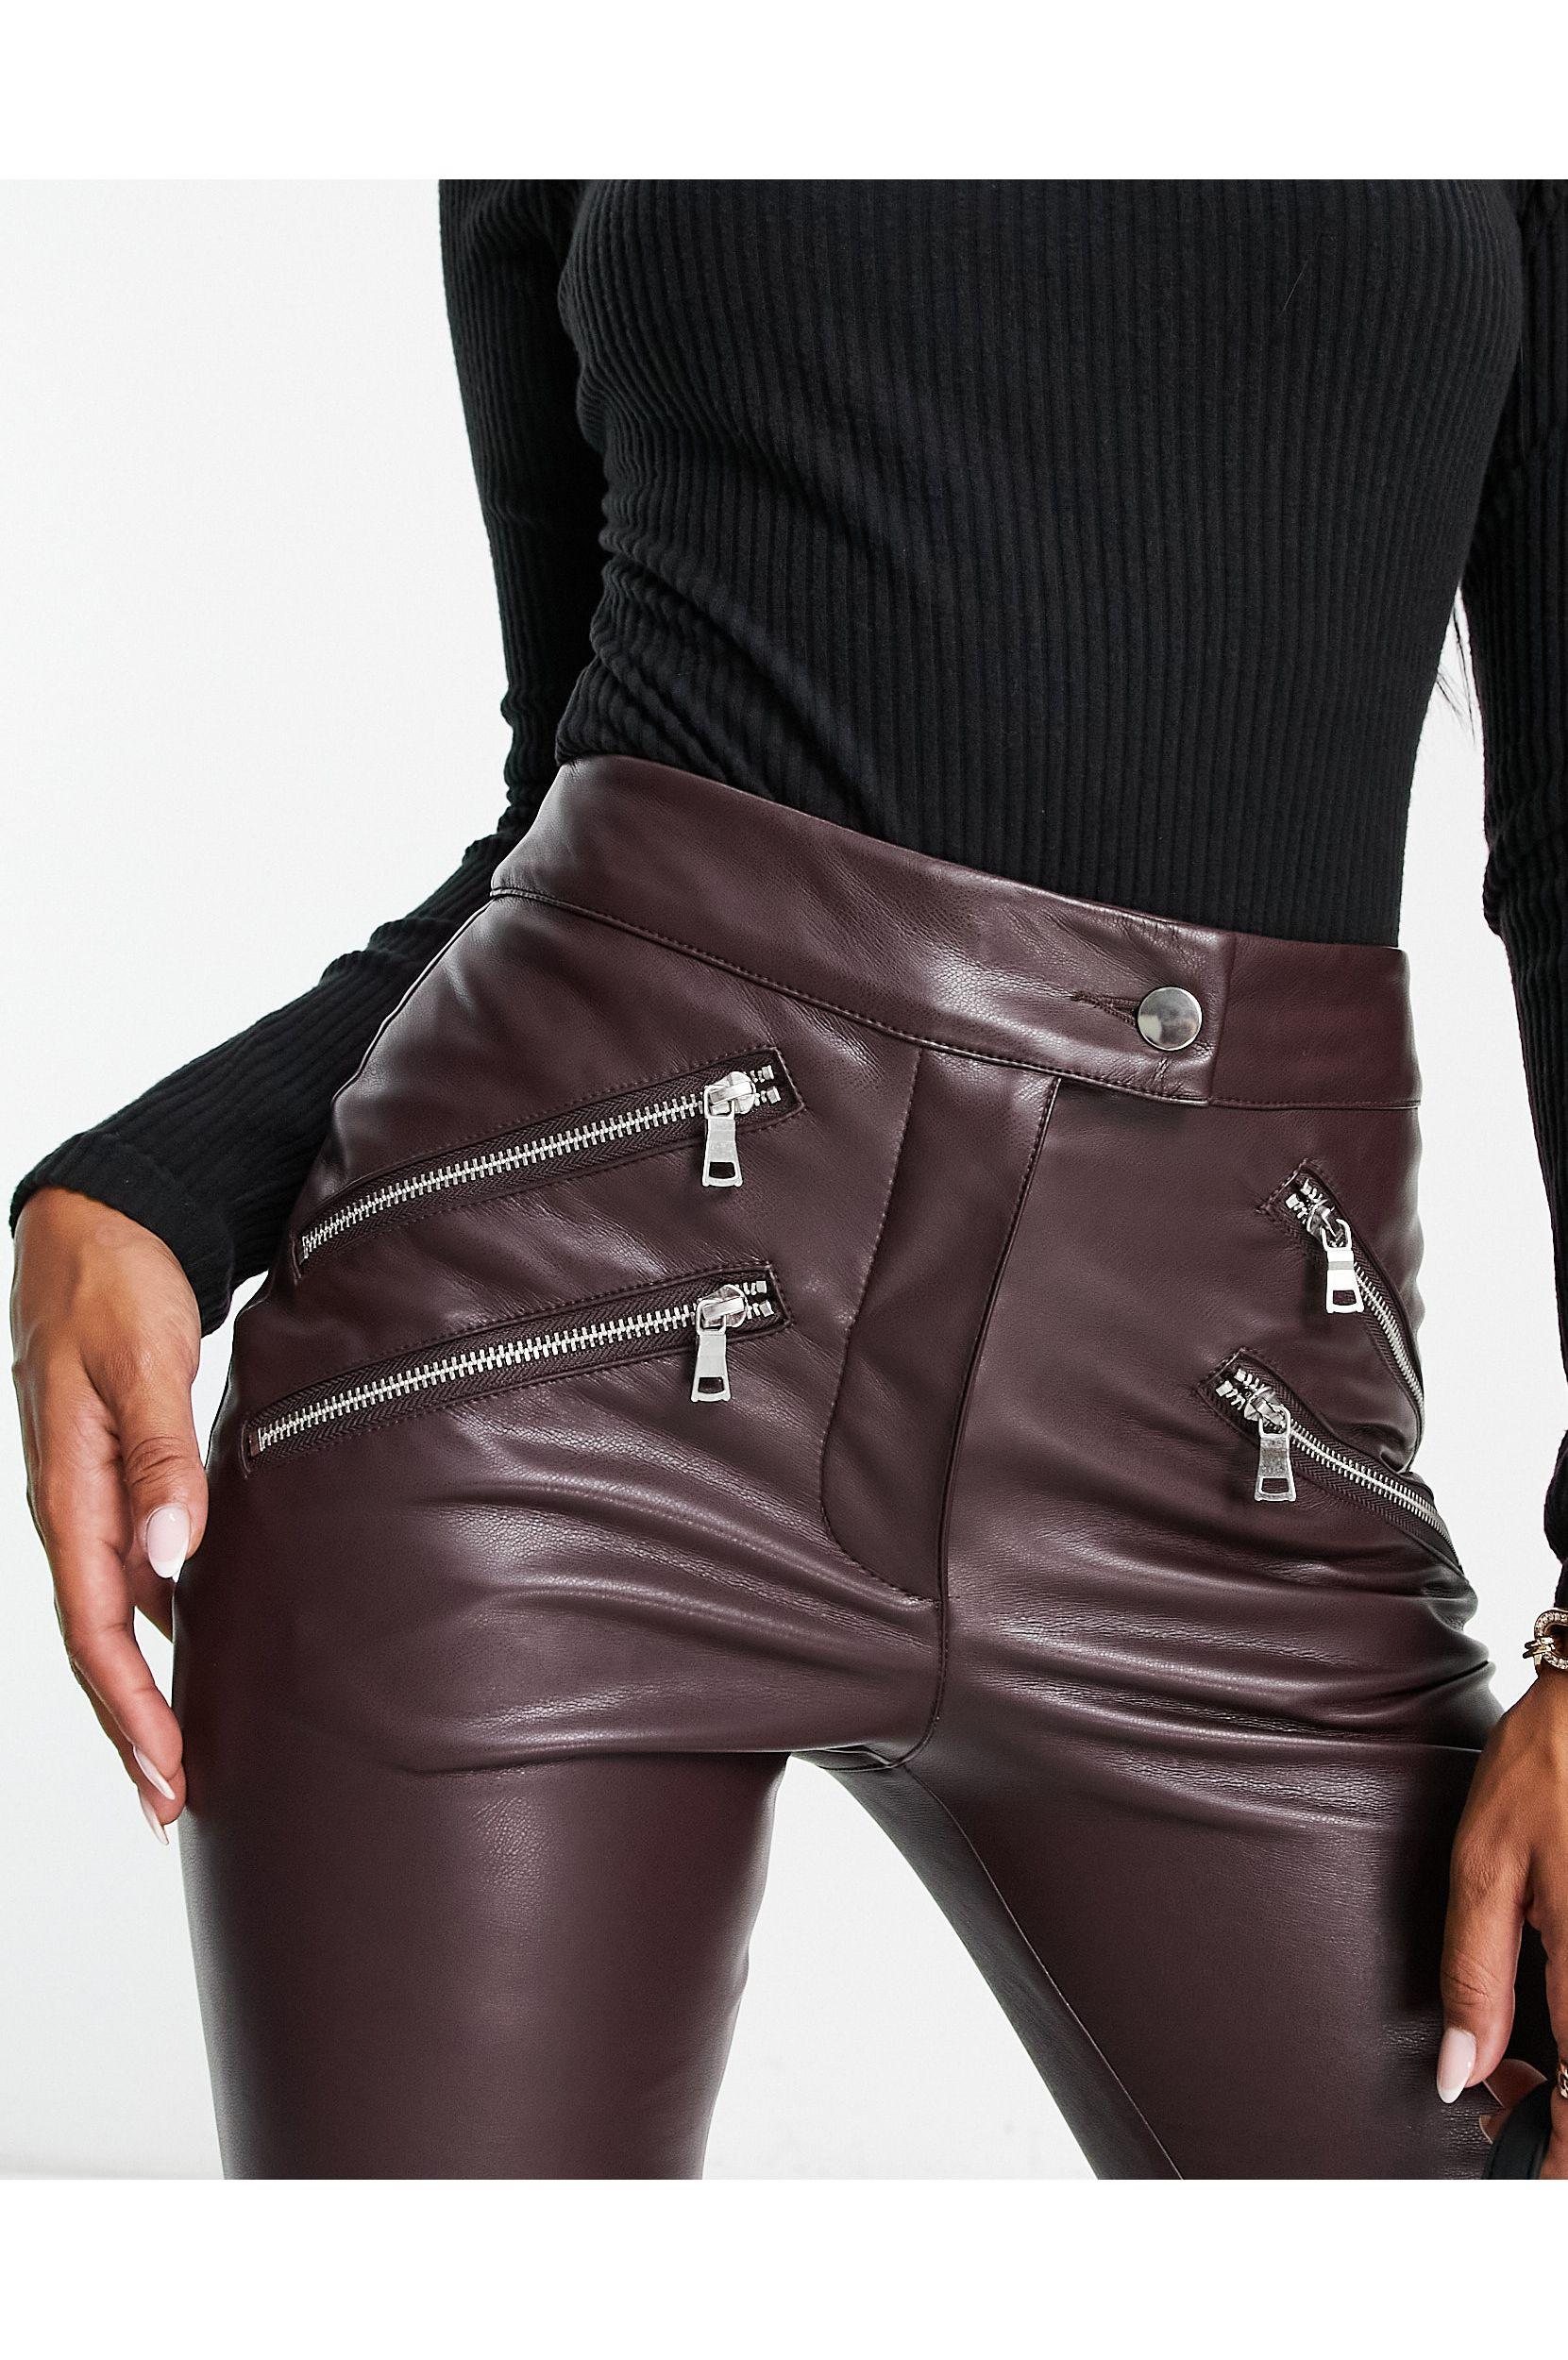 Mercader TROUSERS - Leather trousers - black - Zalando.de